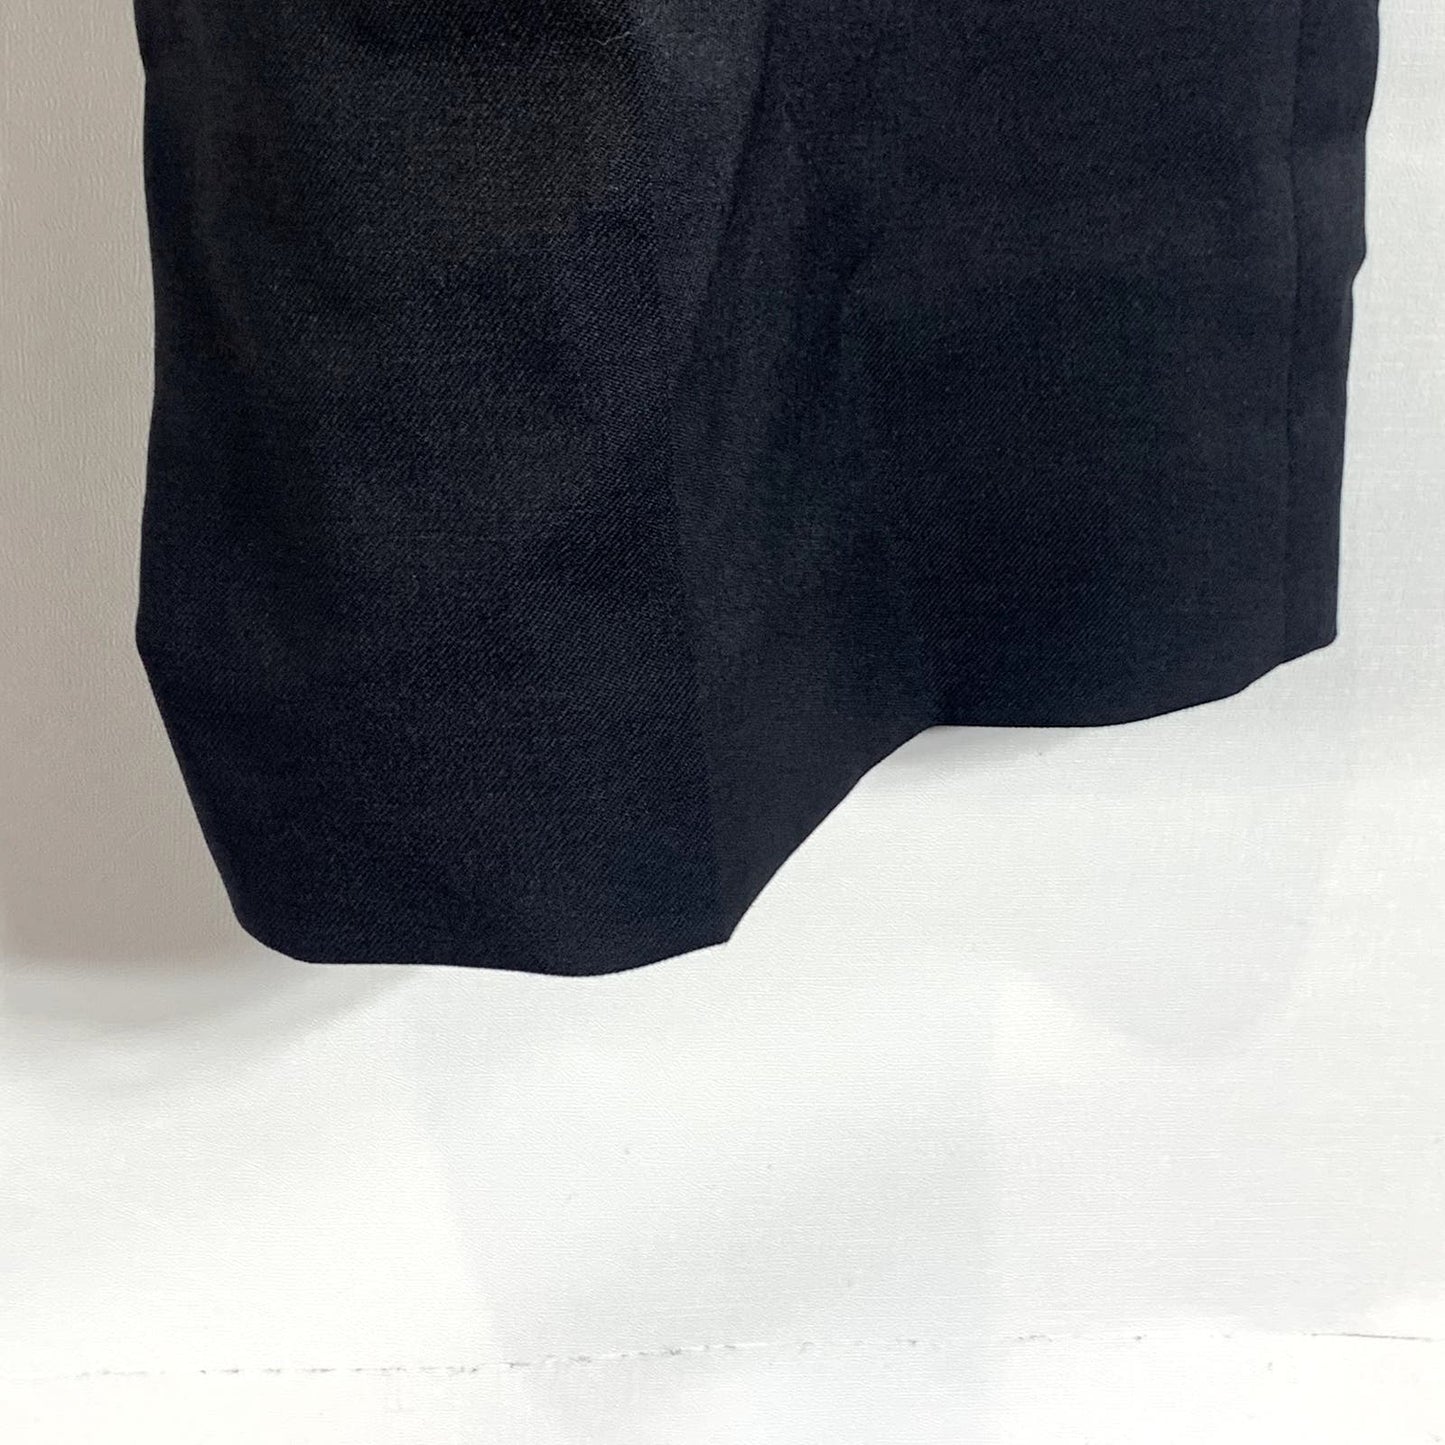 TOMMY HILFIGER Men's Black Solid Modern-Fit TH Flex Stretch Dress Pants SZ 50X30